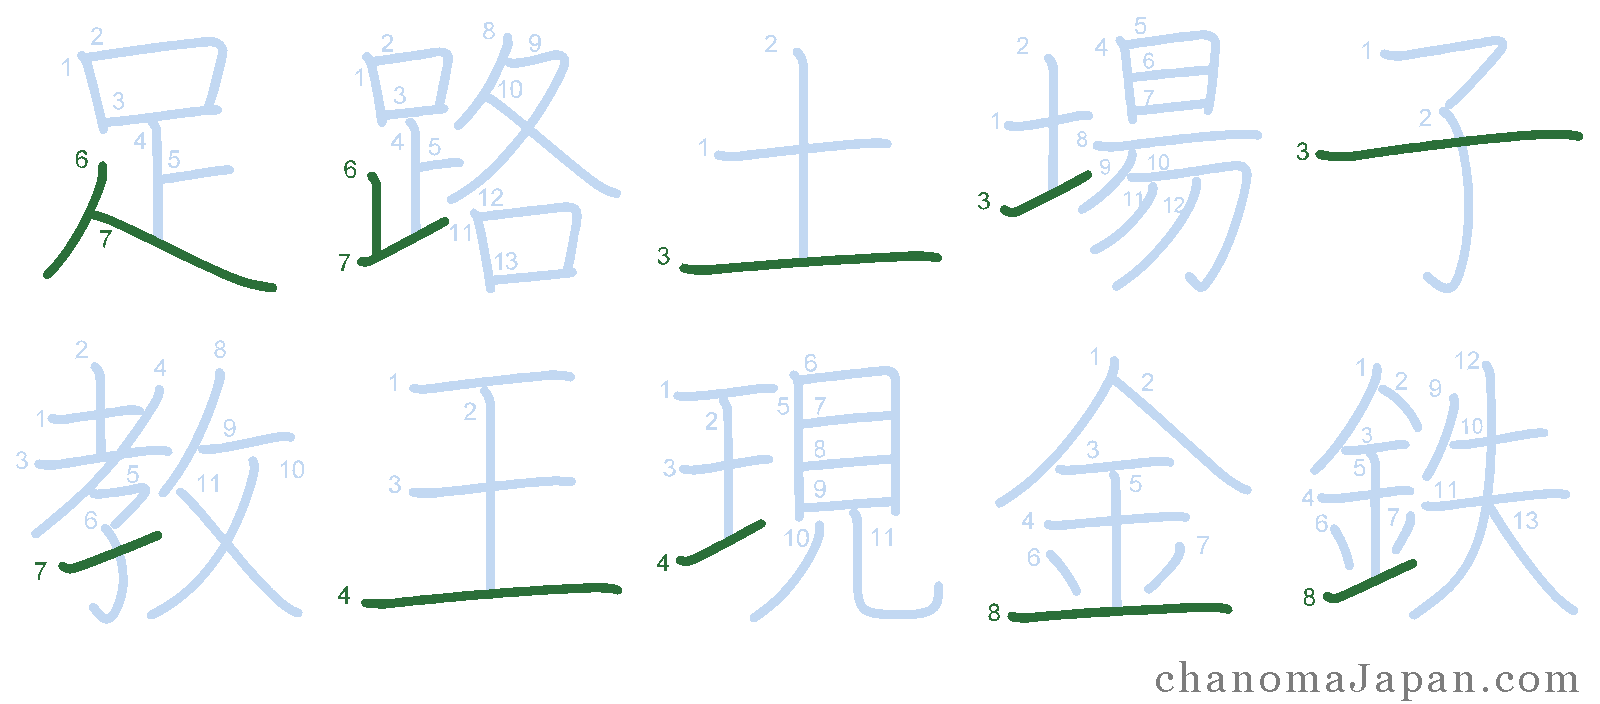 Kanji Stroke Order Guide - cha no ma Japan